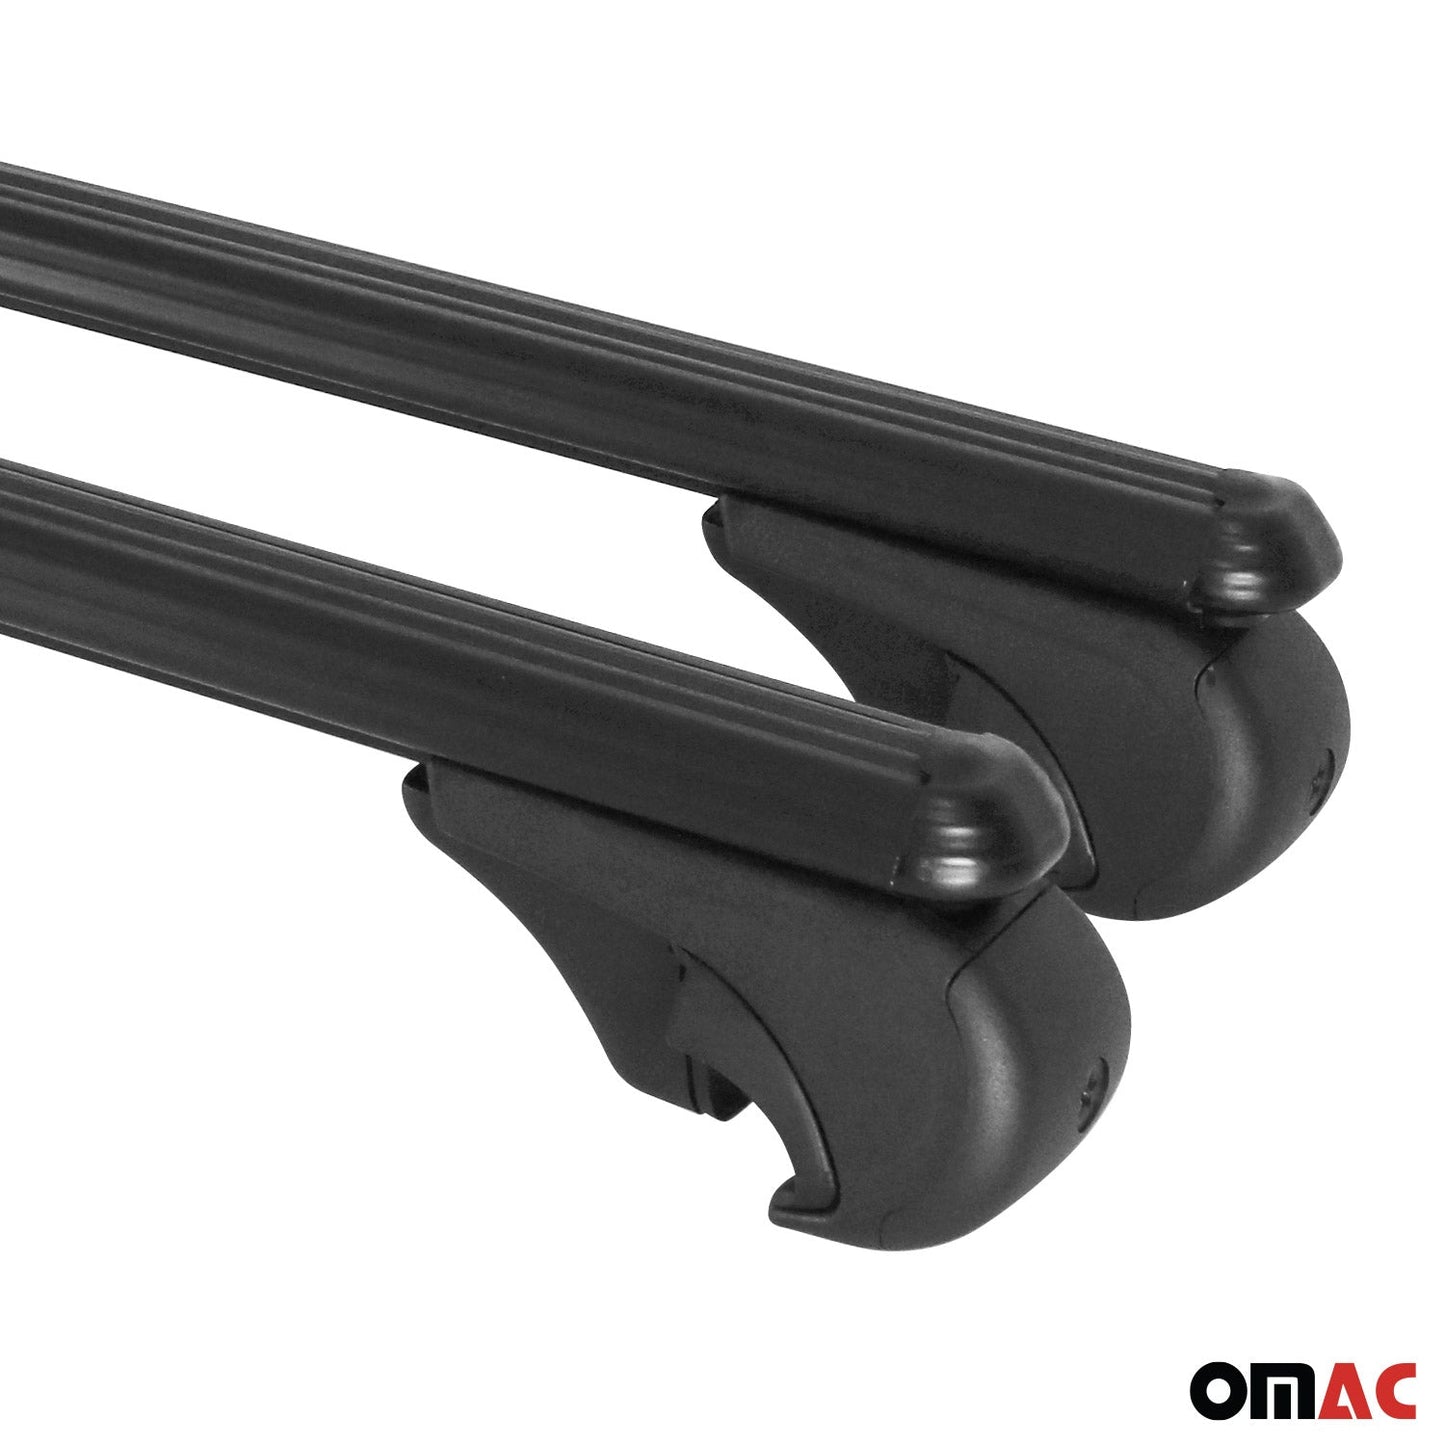 OMAC Bike Rack Carrier Roof Racks Set fits Mitsubishi Outlander 2007-2013 Black 3x U020698